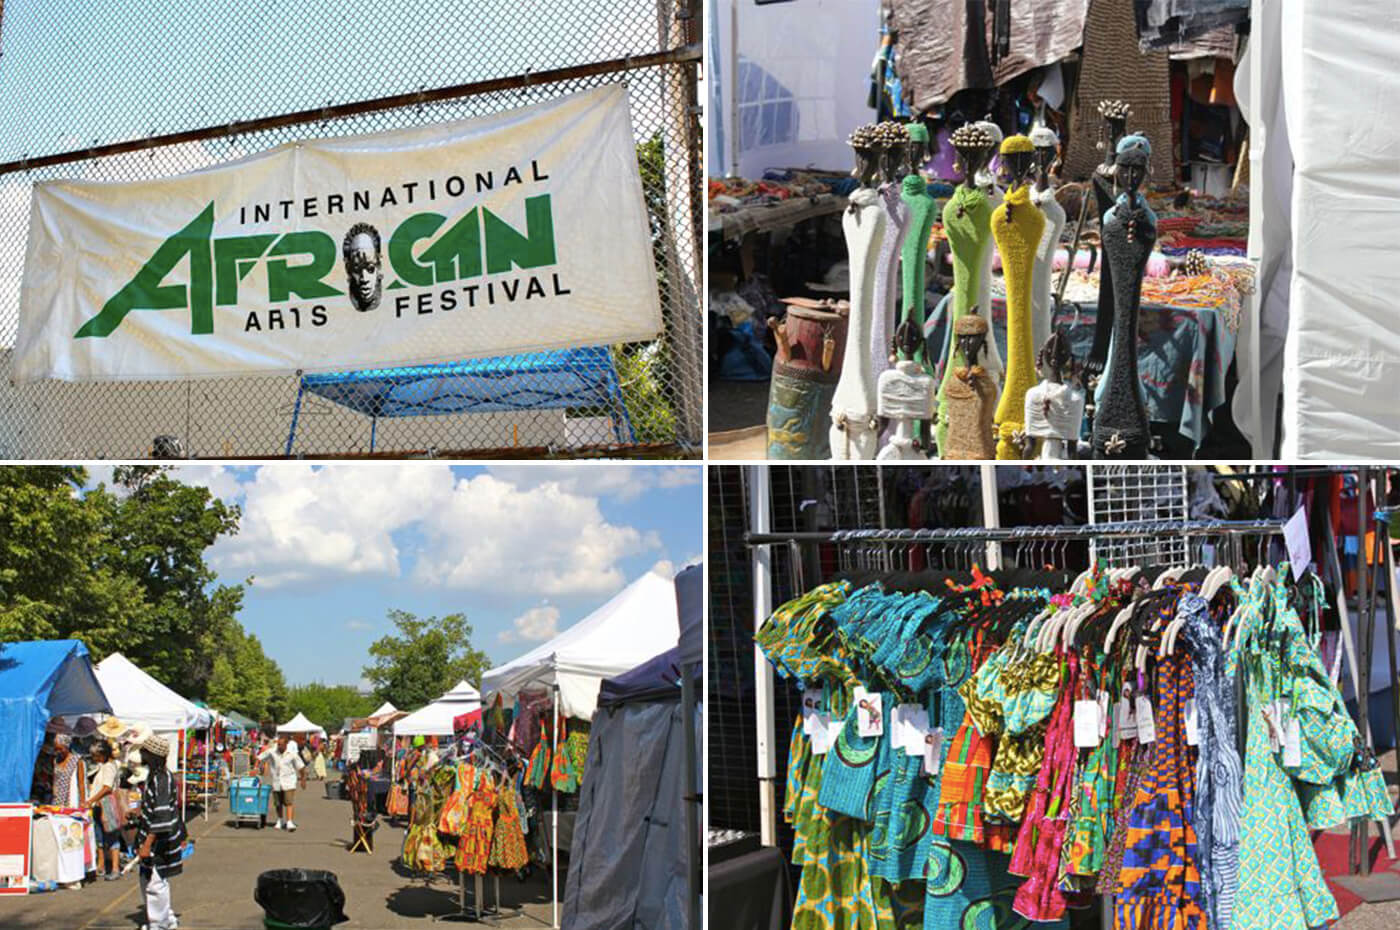 Brooklyn Arts Council Events 2016 Summer Festival African Arts International